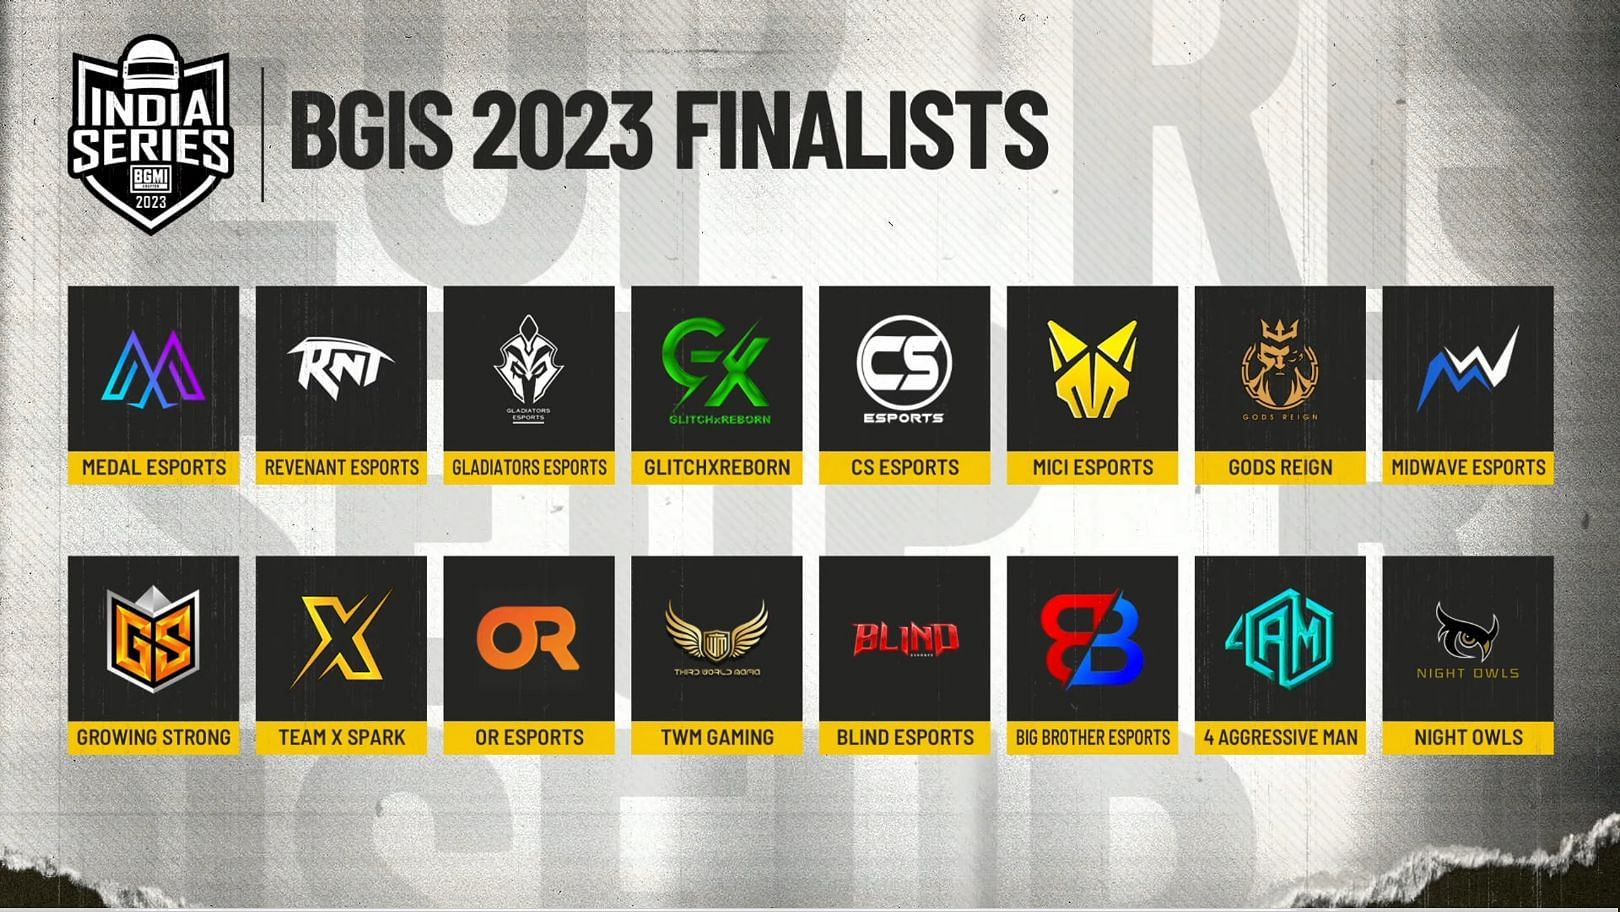 India Series 2023 Finalists (Image via BGMI)